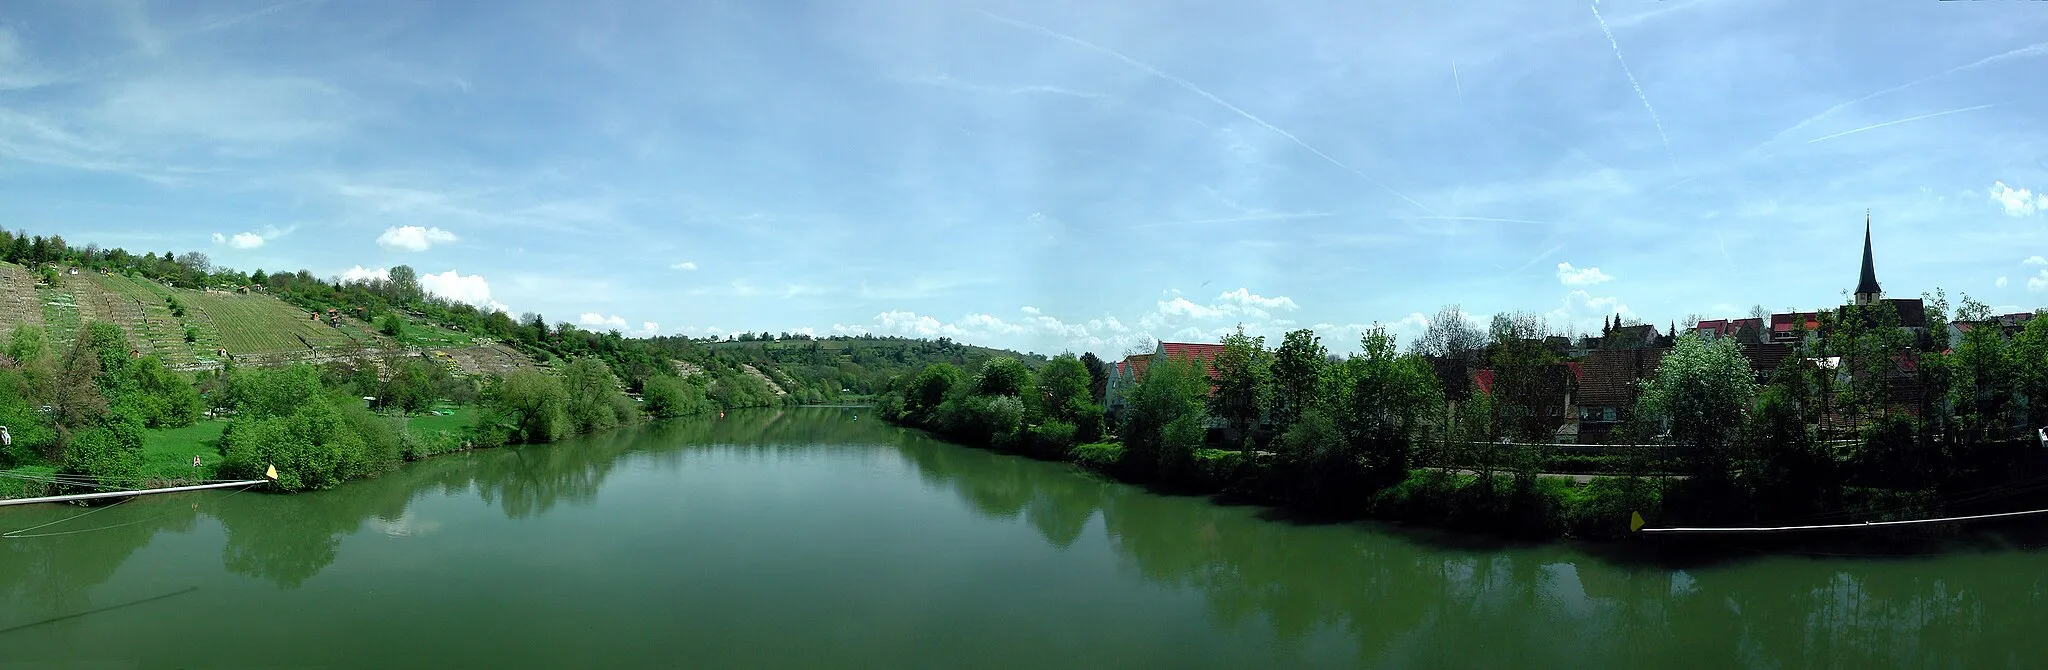 Image of Benningen am Neckar